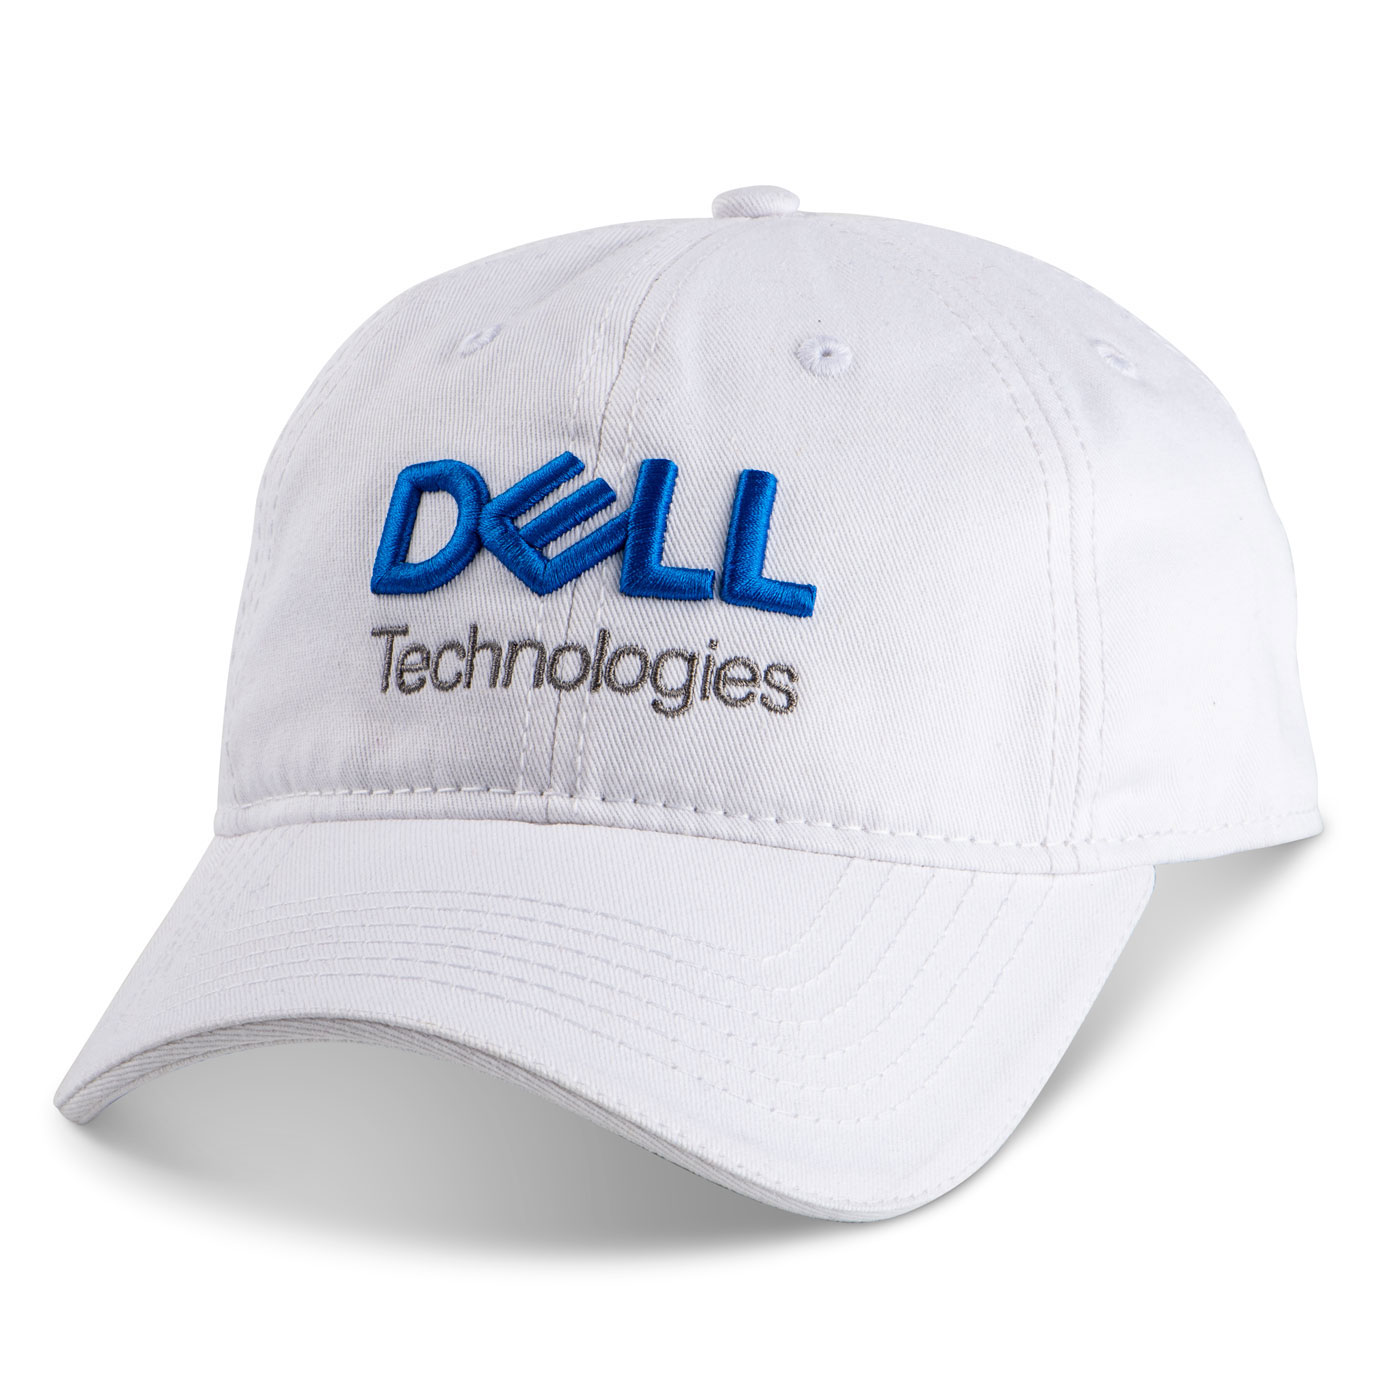 Dell Technologies Chino Twill Buckle 